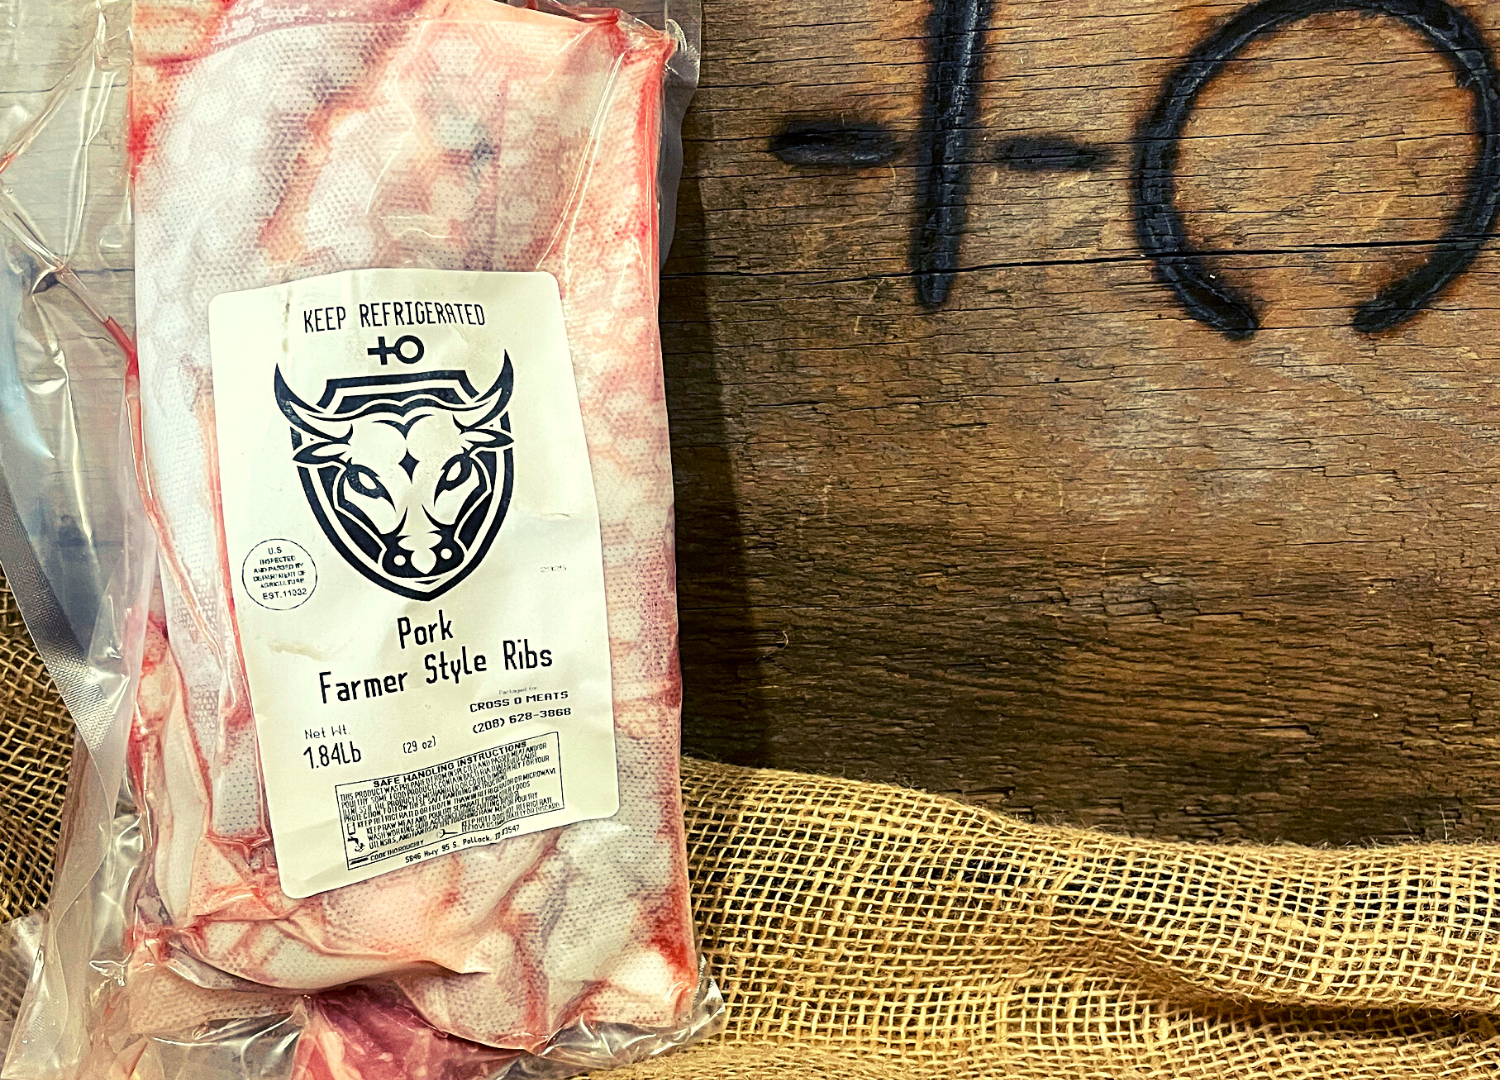 Pork Farm Style Ribs - Shipped